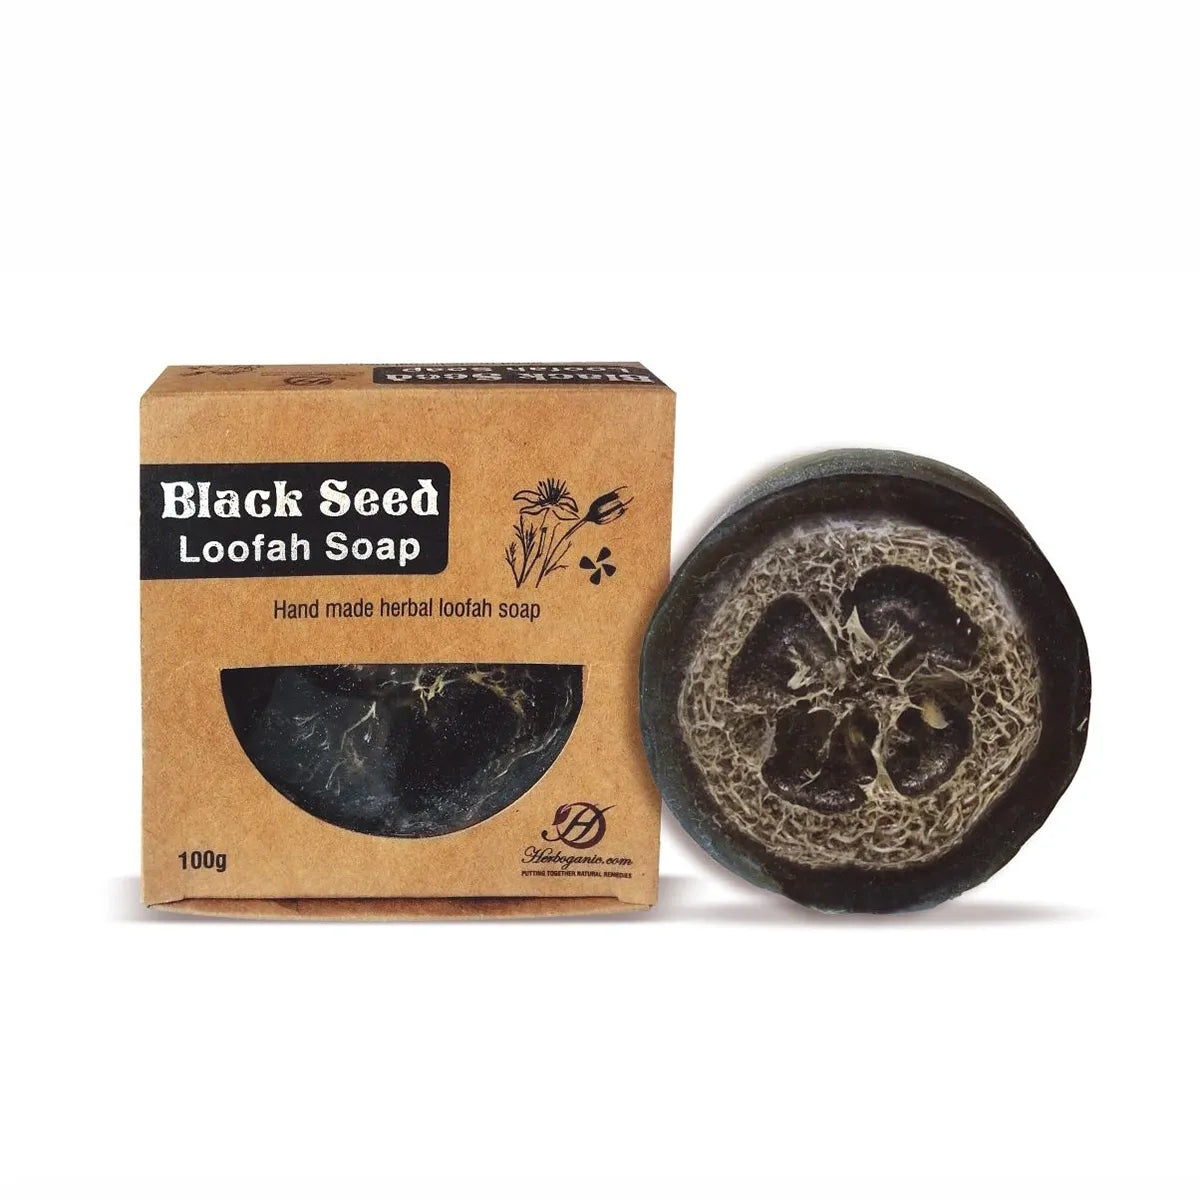 Black Seed Loofah Soap - 100g